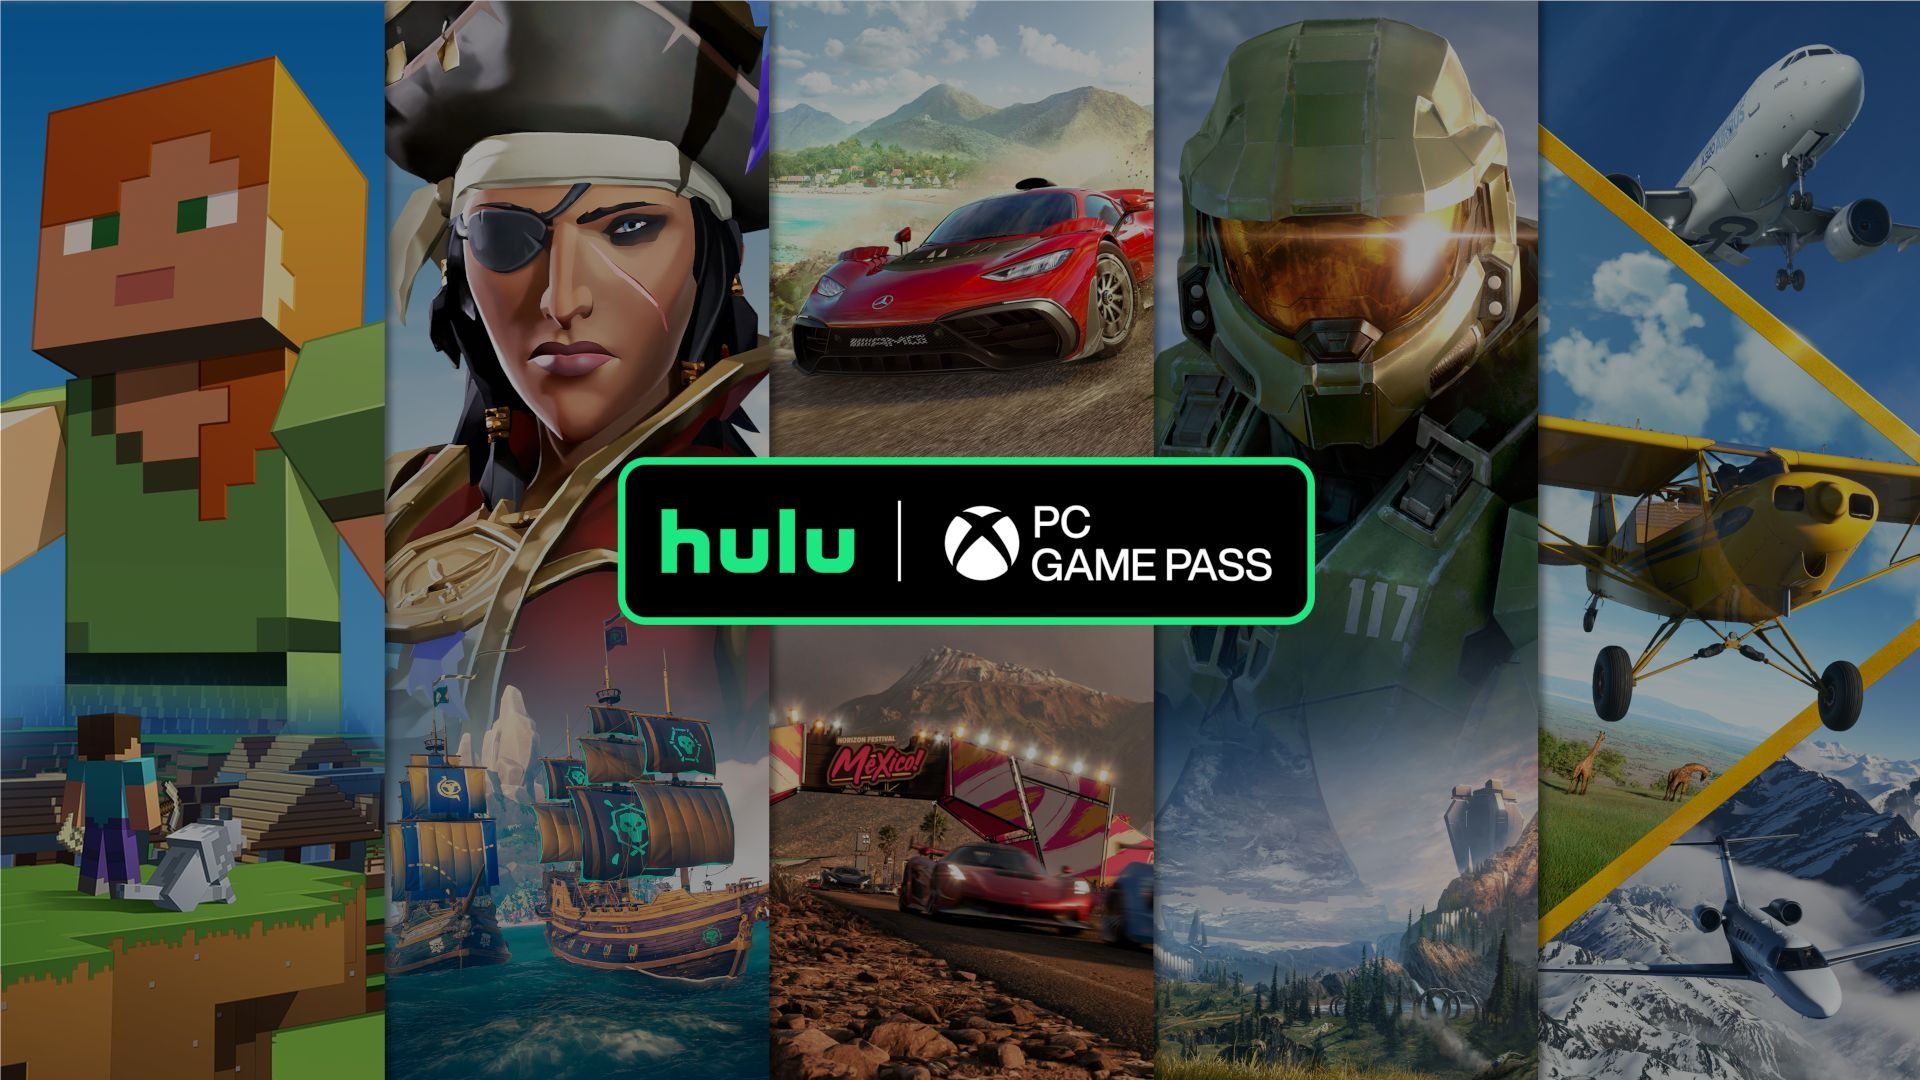 HuluはXboxGamePassを無料で配布します